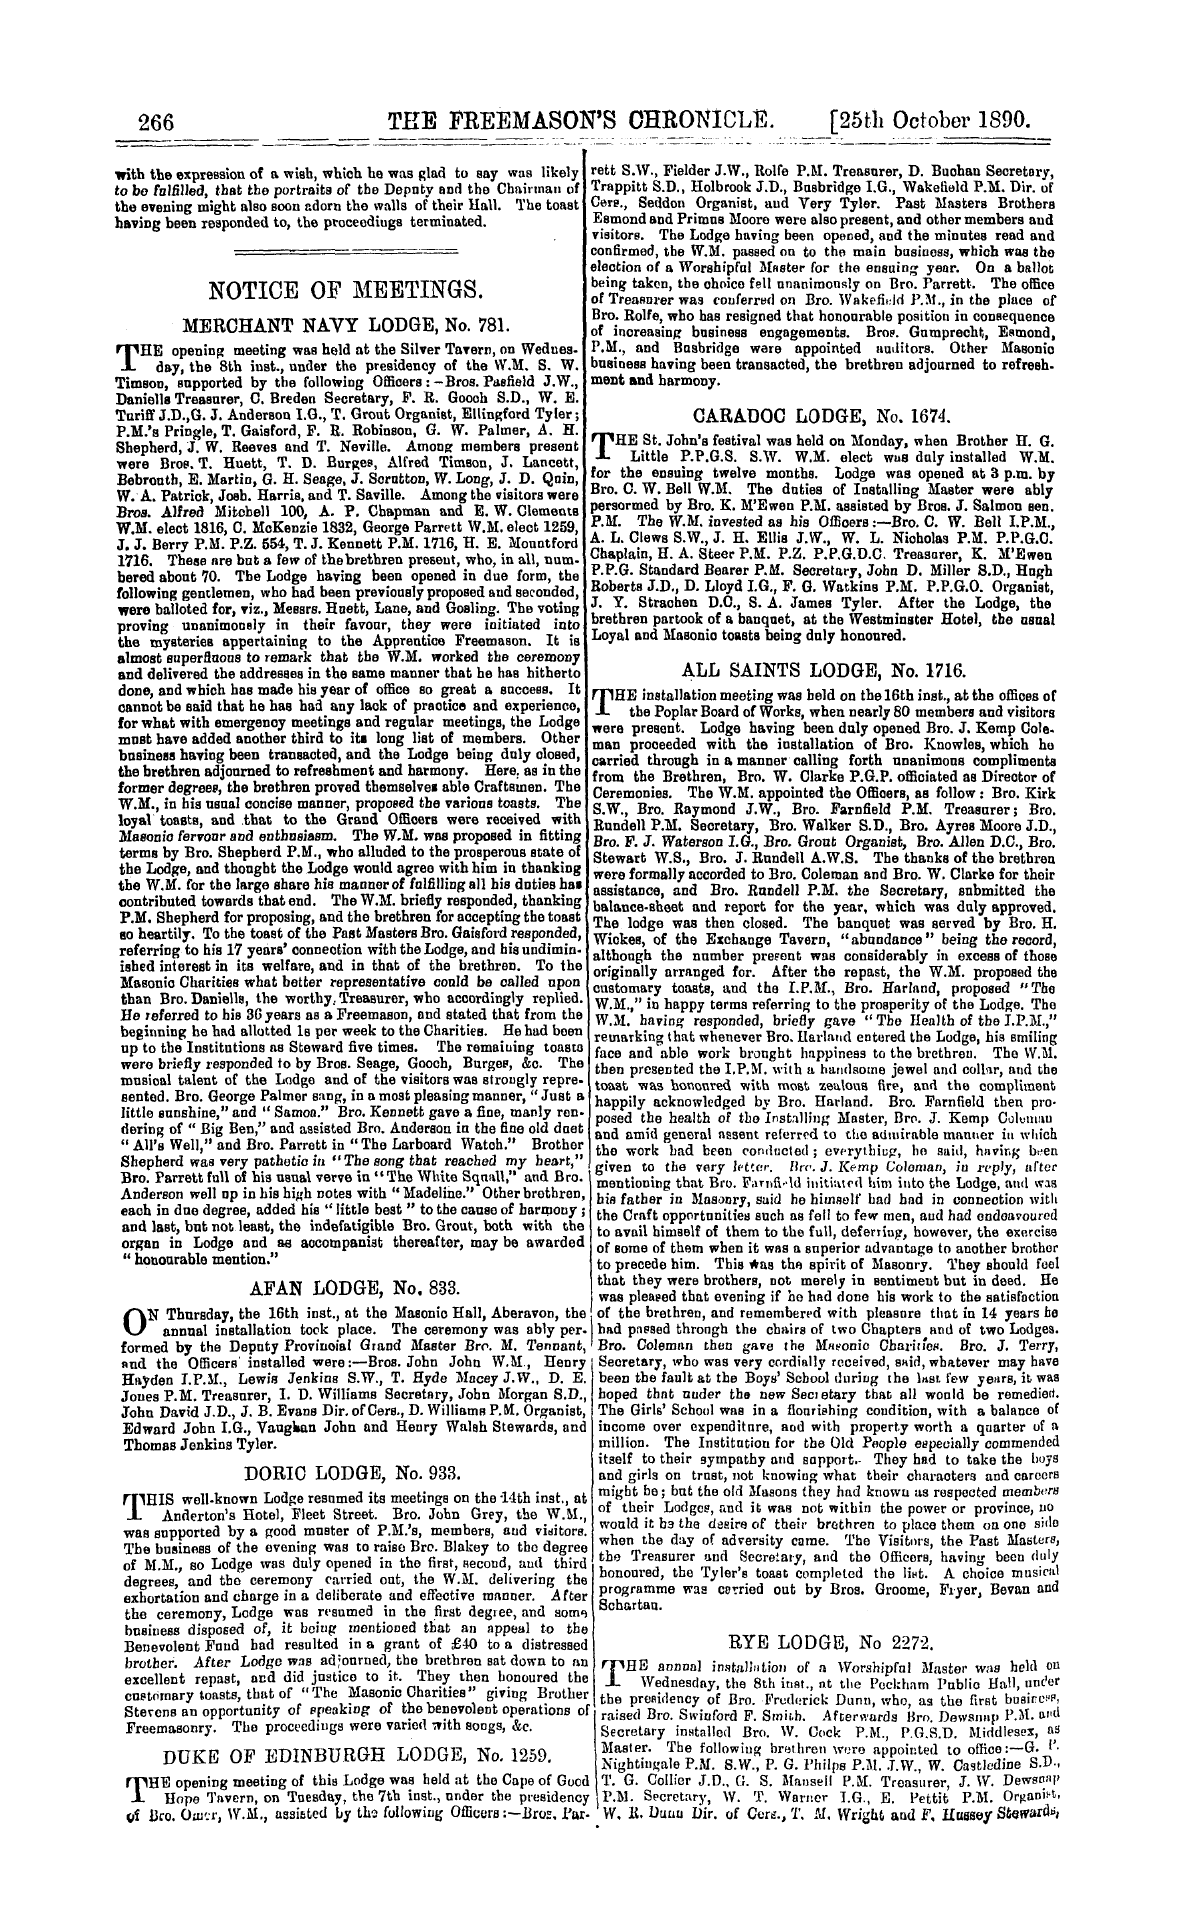 The Freemason's Chronicle: 1890-10-25: 10